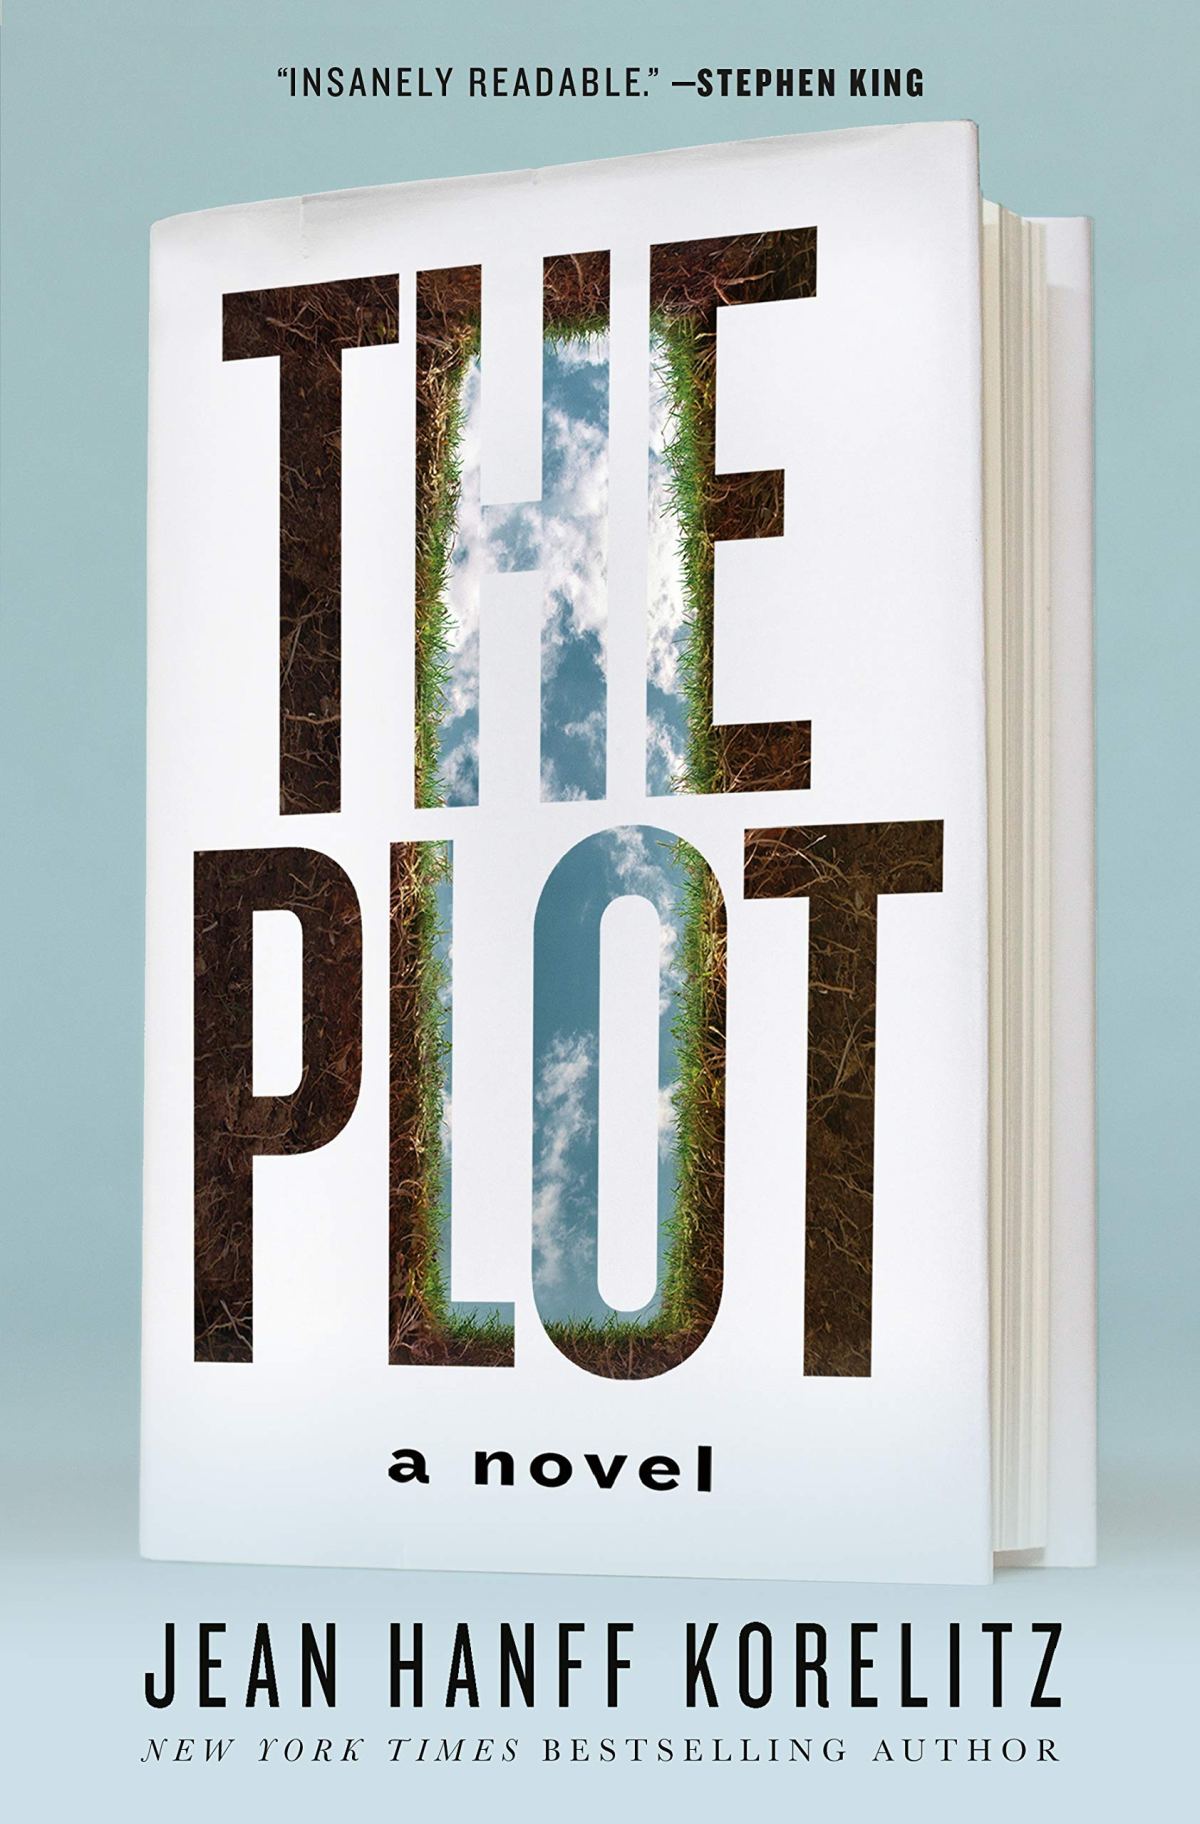 Book 68 – The Plot by Jean Hanff Korelitz